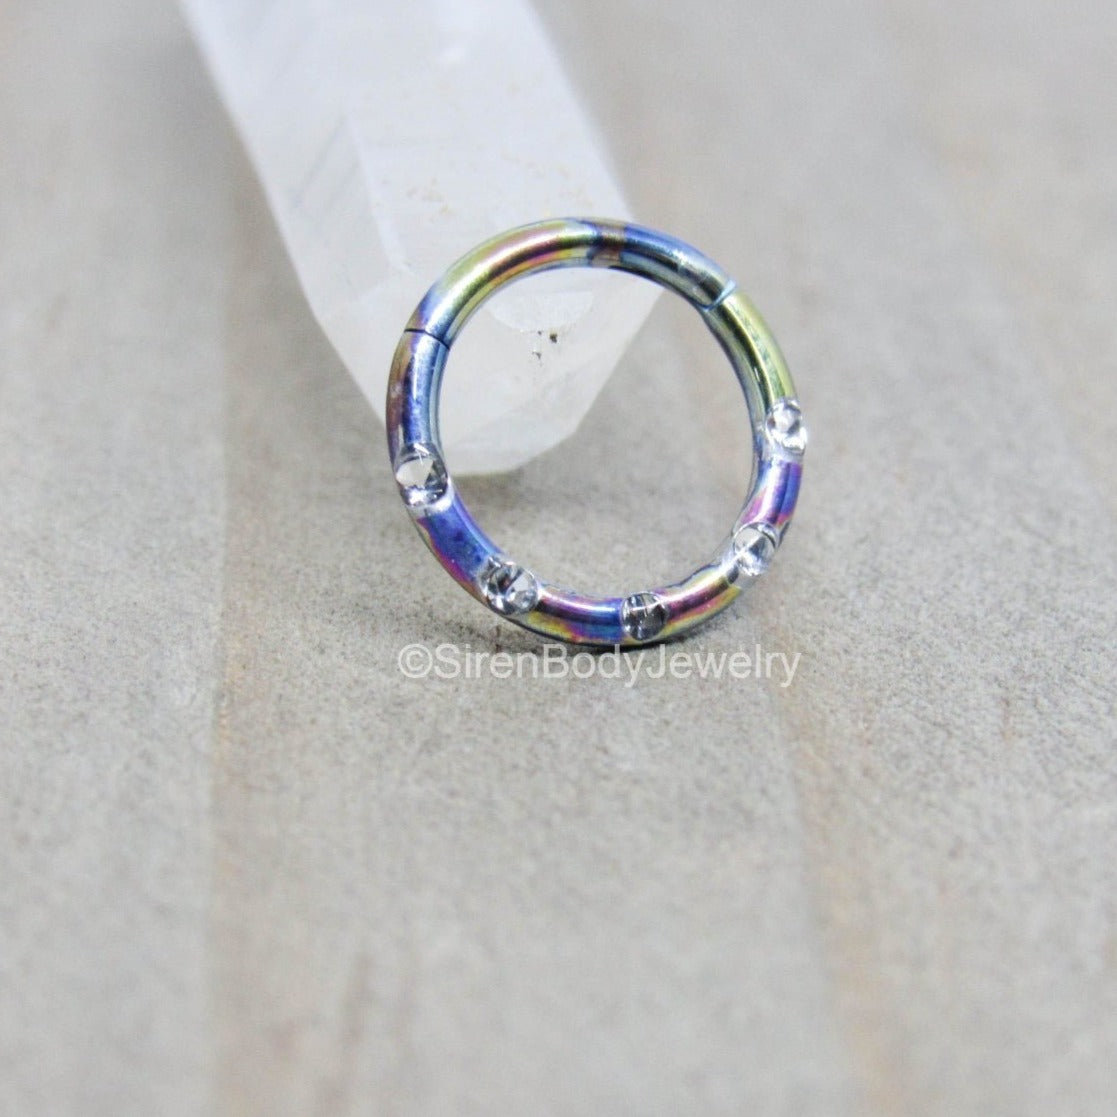 Titanium hinged segment ring 16g 5/16" or 3/8" easy insert 5 preciosa crystals forward facing septum daith ring - SirenBodyJewelry